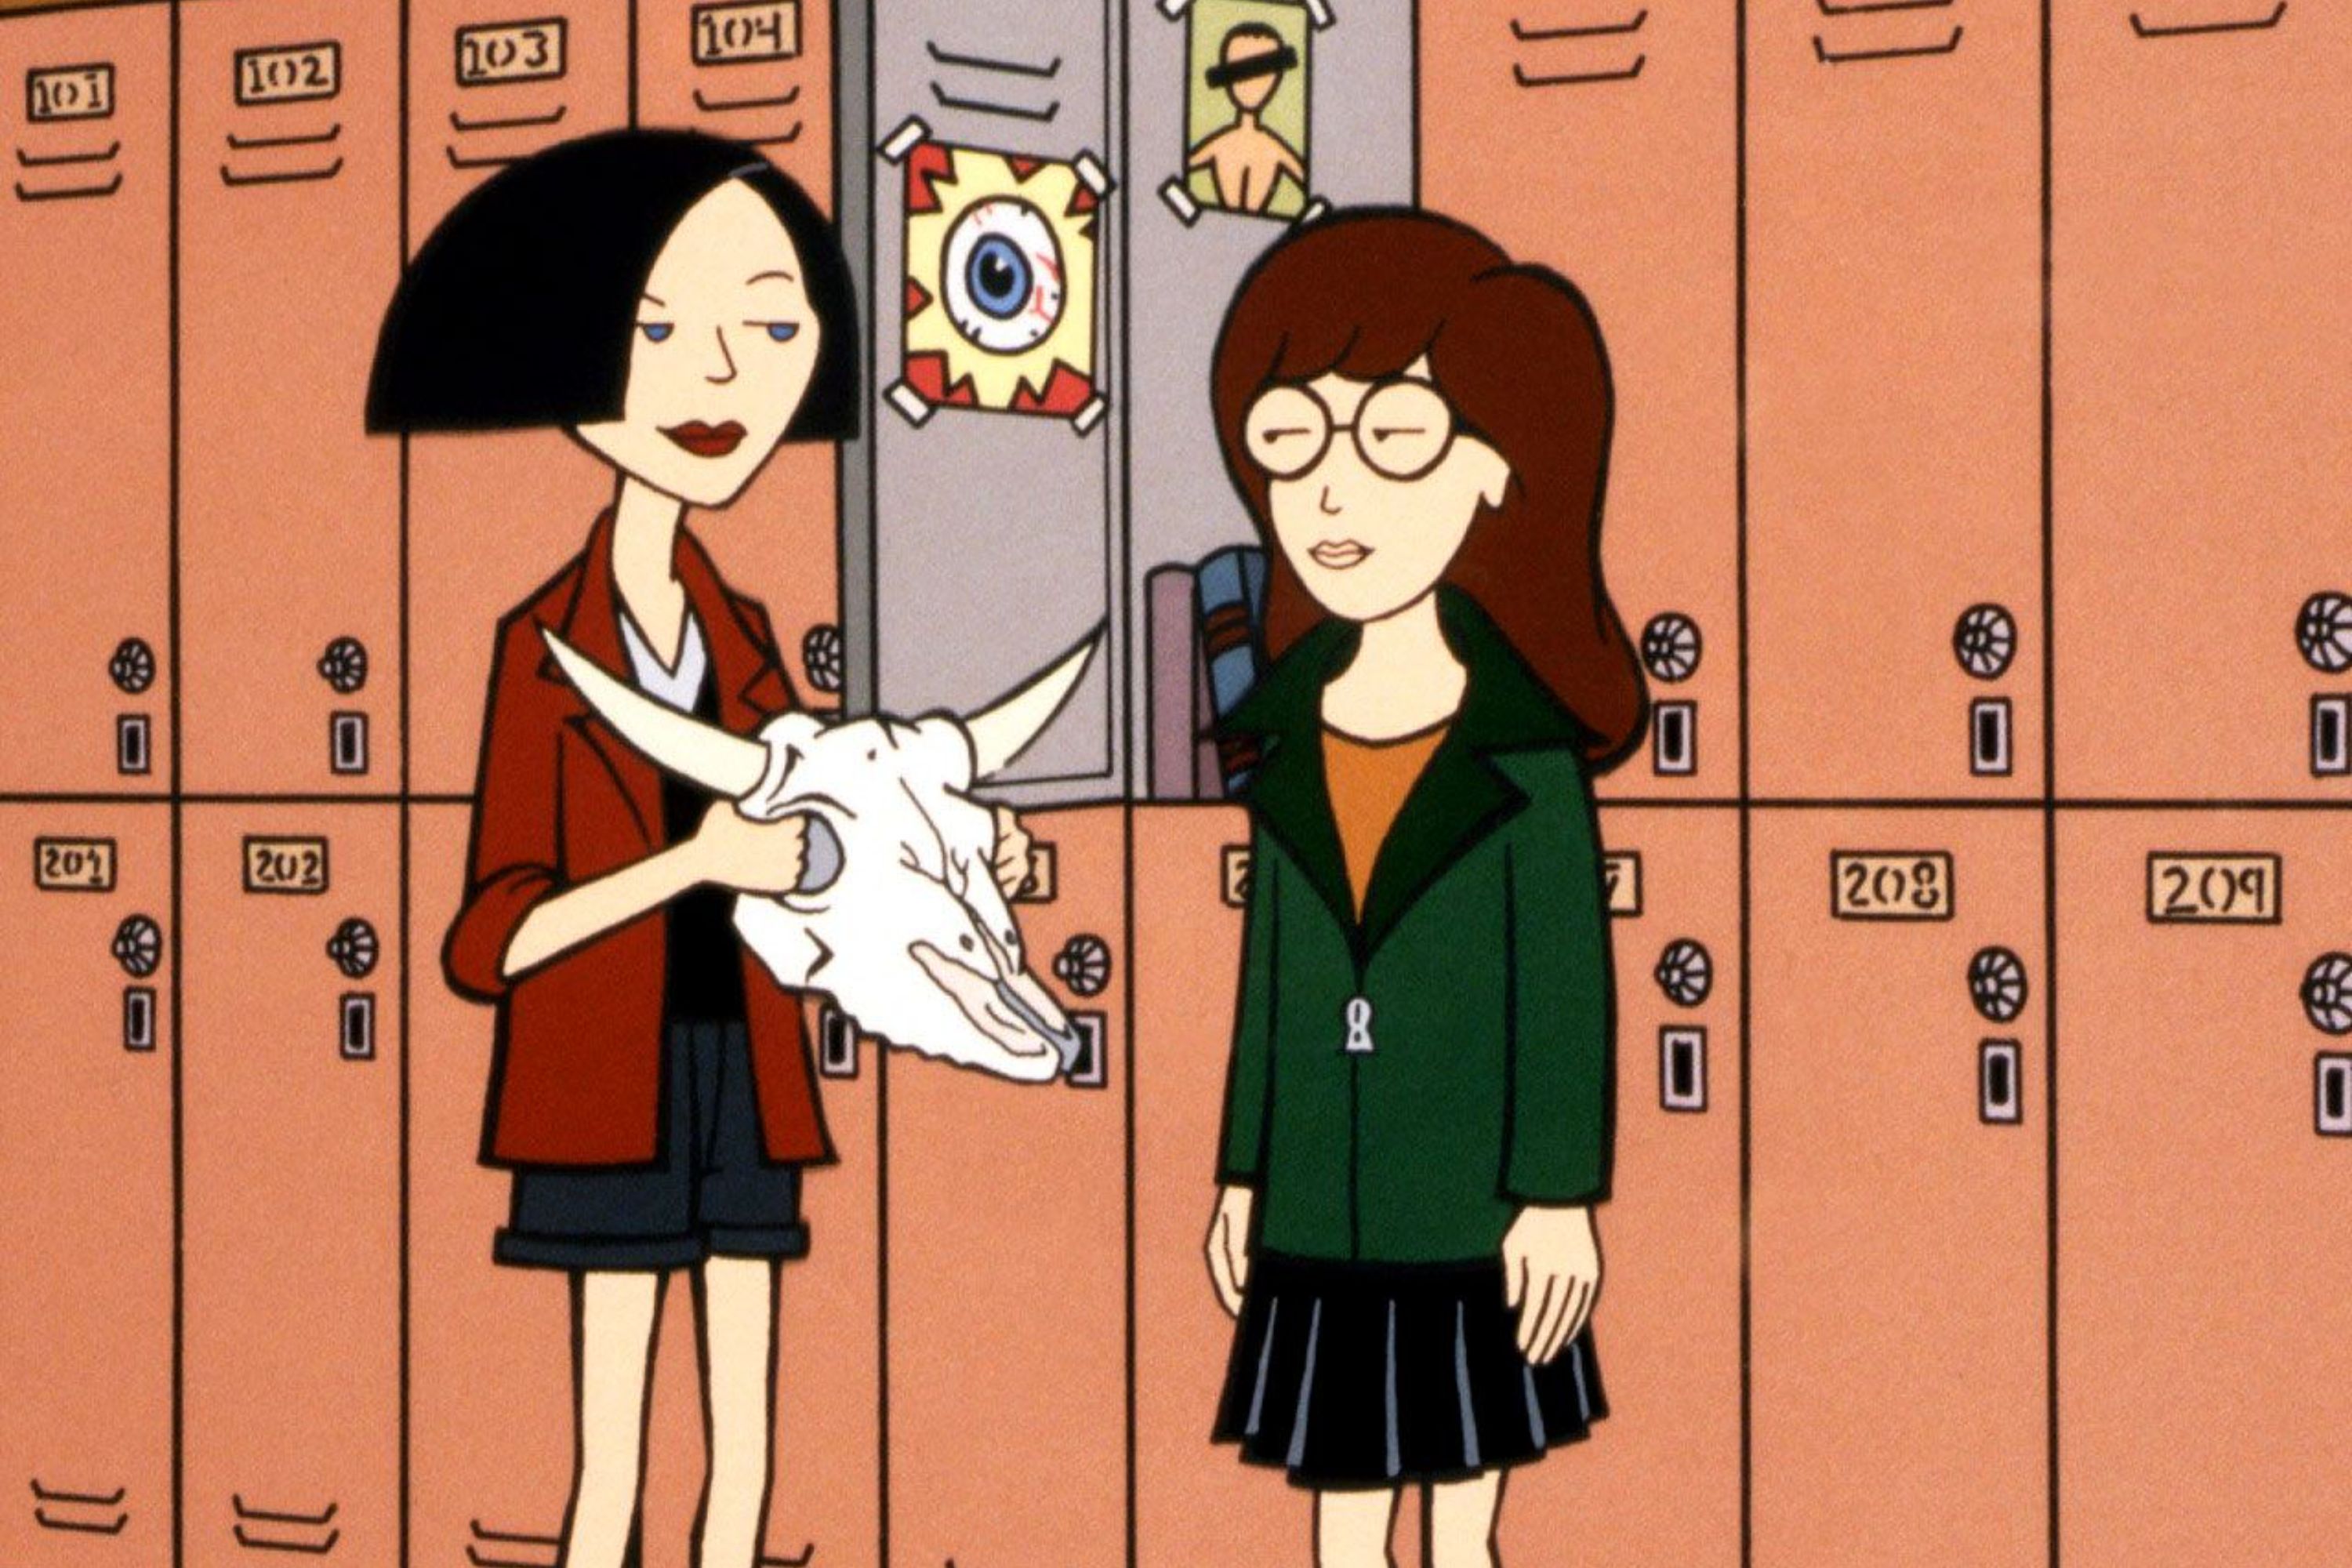 Daria and Jane standing by lockers in Daria.